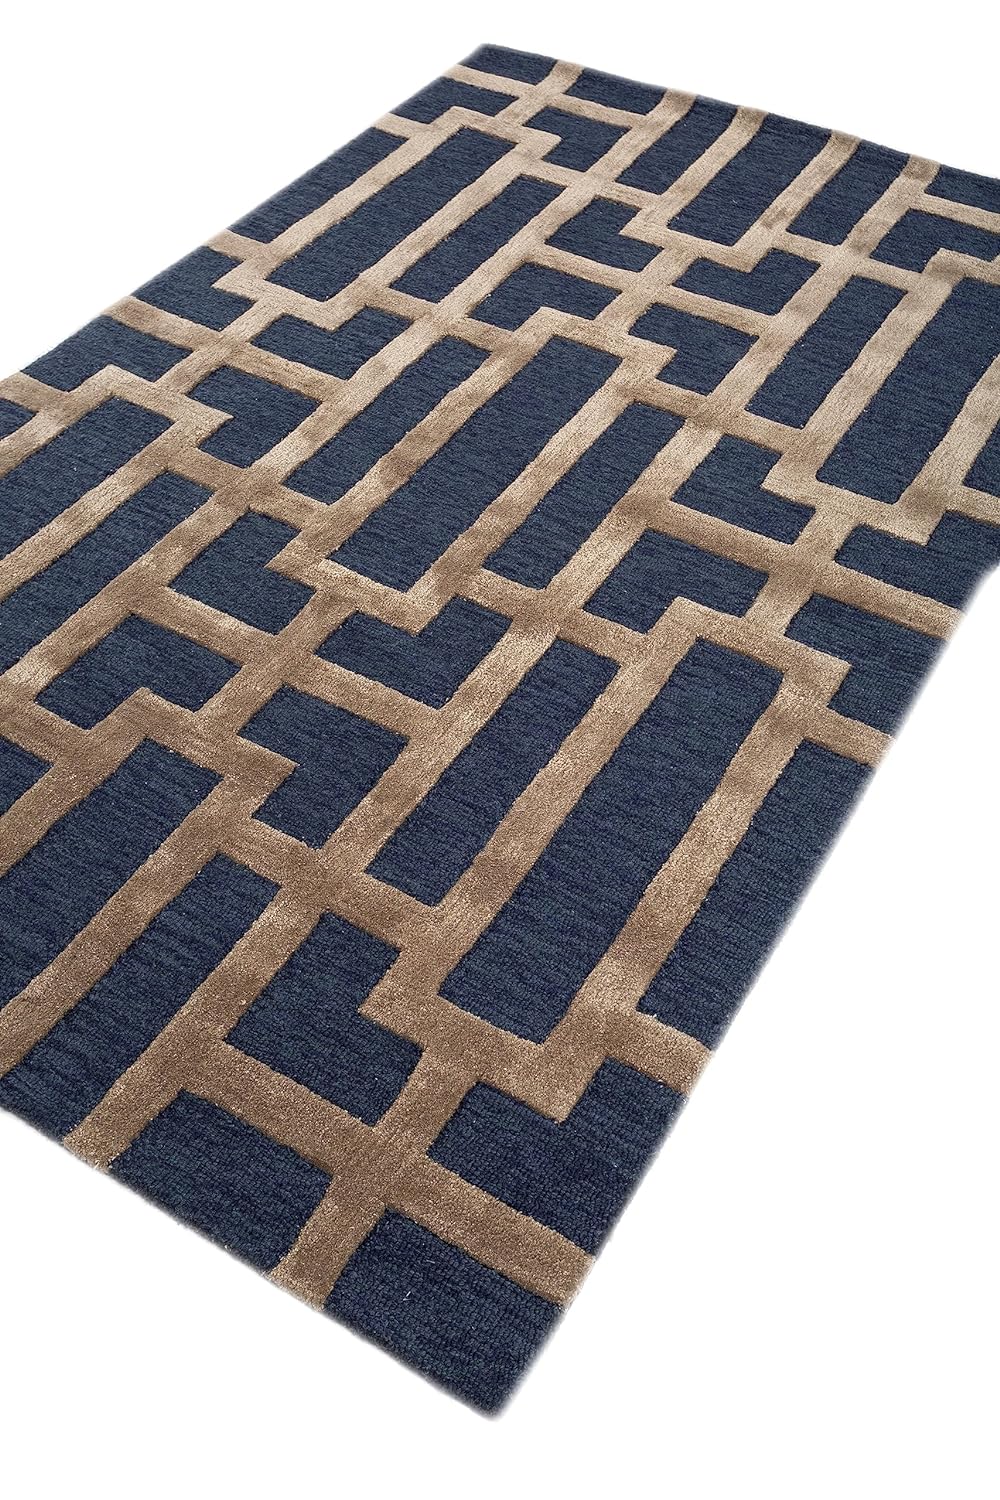 Handmade Geometric Wool Rug: Navy/Dark Gray | Wool & Viscose Geometric Handmade Tufted Lightweight Carpet (Blue, 5x8 Feet)